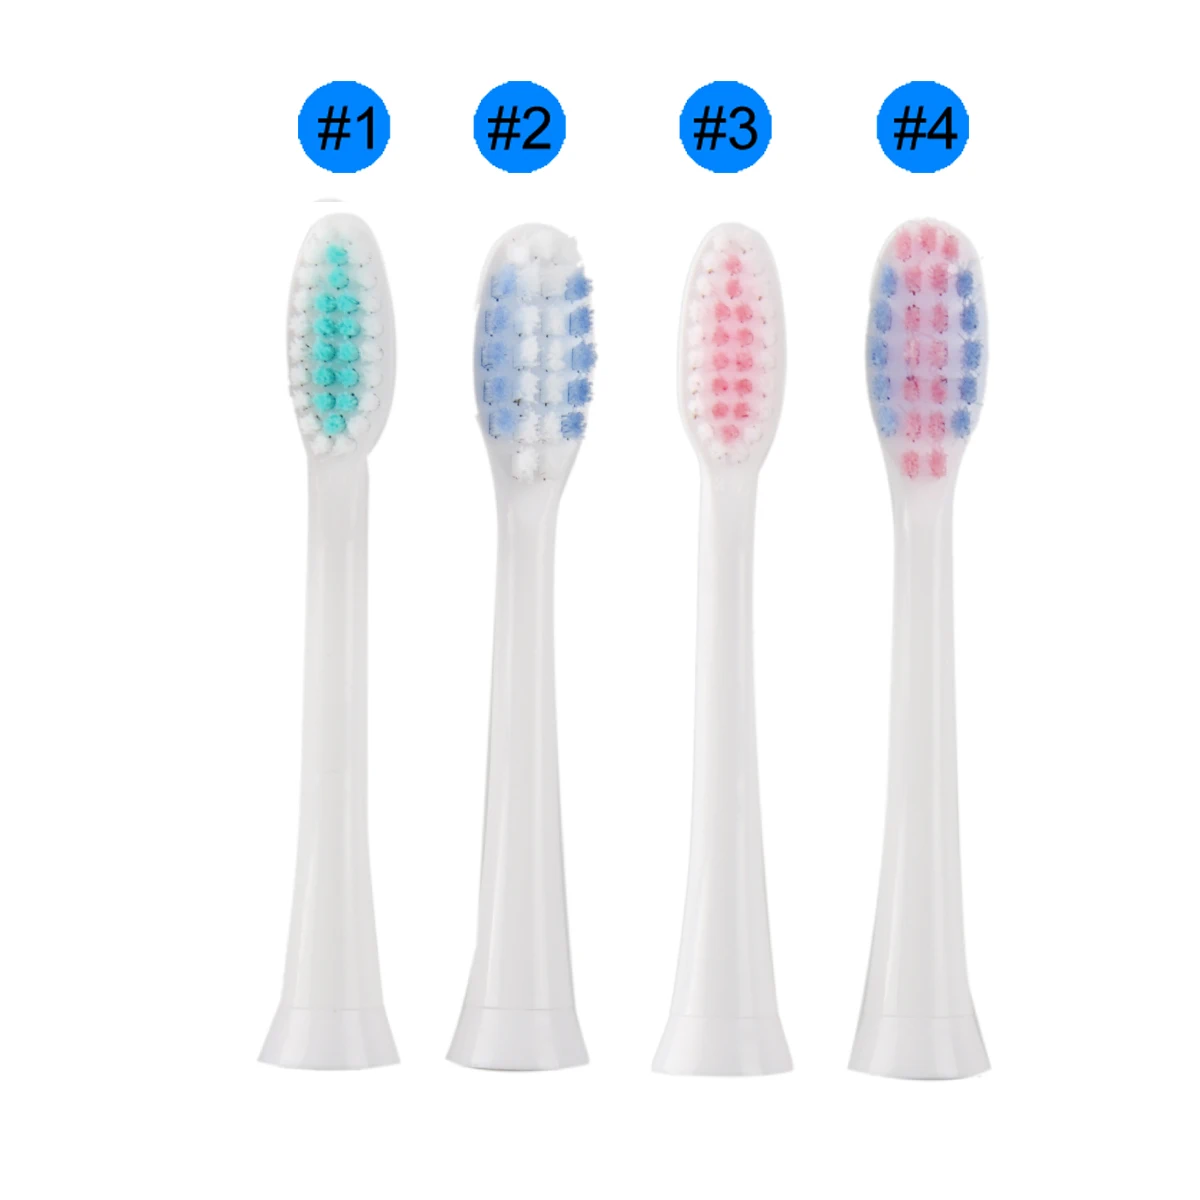 

10pcs Lansung Toothbrush Head For Lansung I1 Toothbrush Electric Replacement насадки на зубную щетку